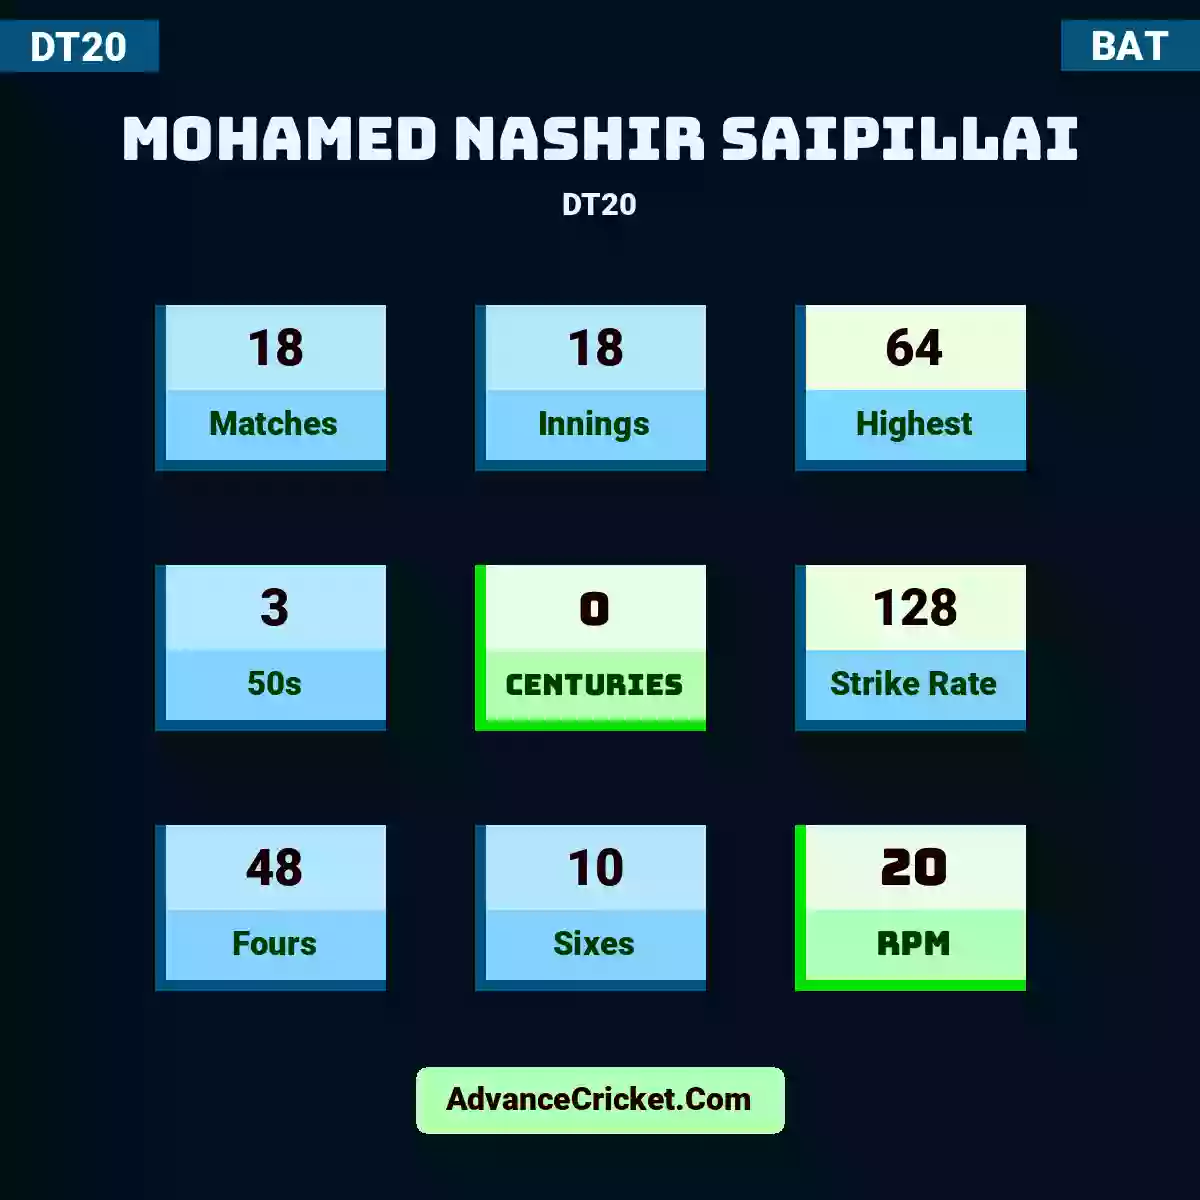 Mohamed Nashir Saipillai DT20 , Mohamed Nashir Saipillai played 18 matches, scored 64 runs as highest, 3 half-centuries, and 0 centuries, with a strike rate of 128. M.Nashir.Saipillai hit 48 fours and 10 sixes, with an RPM of 20.